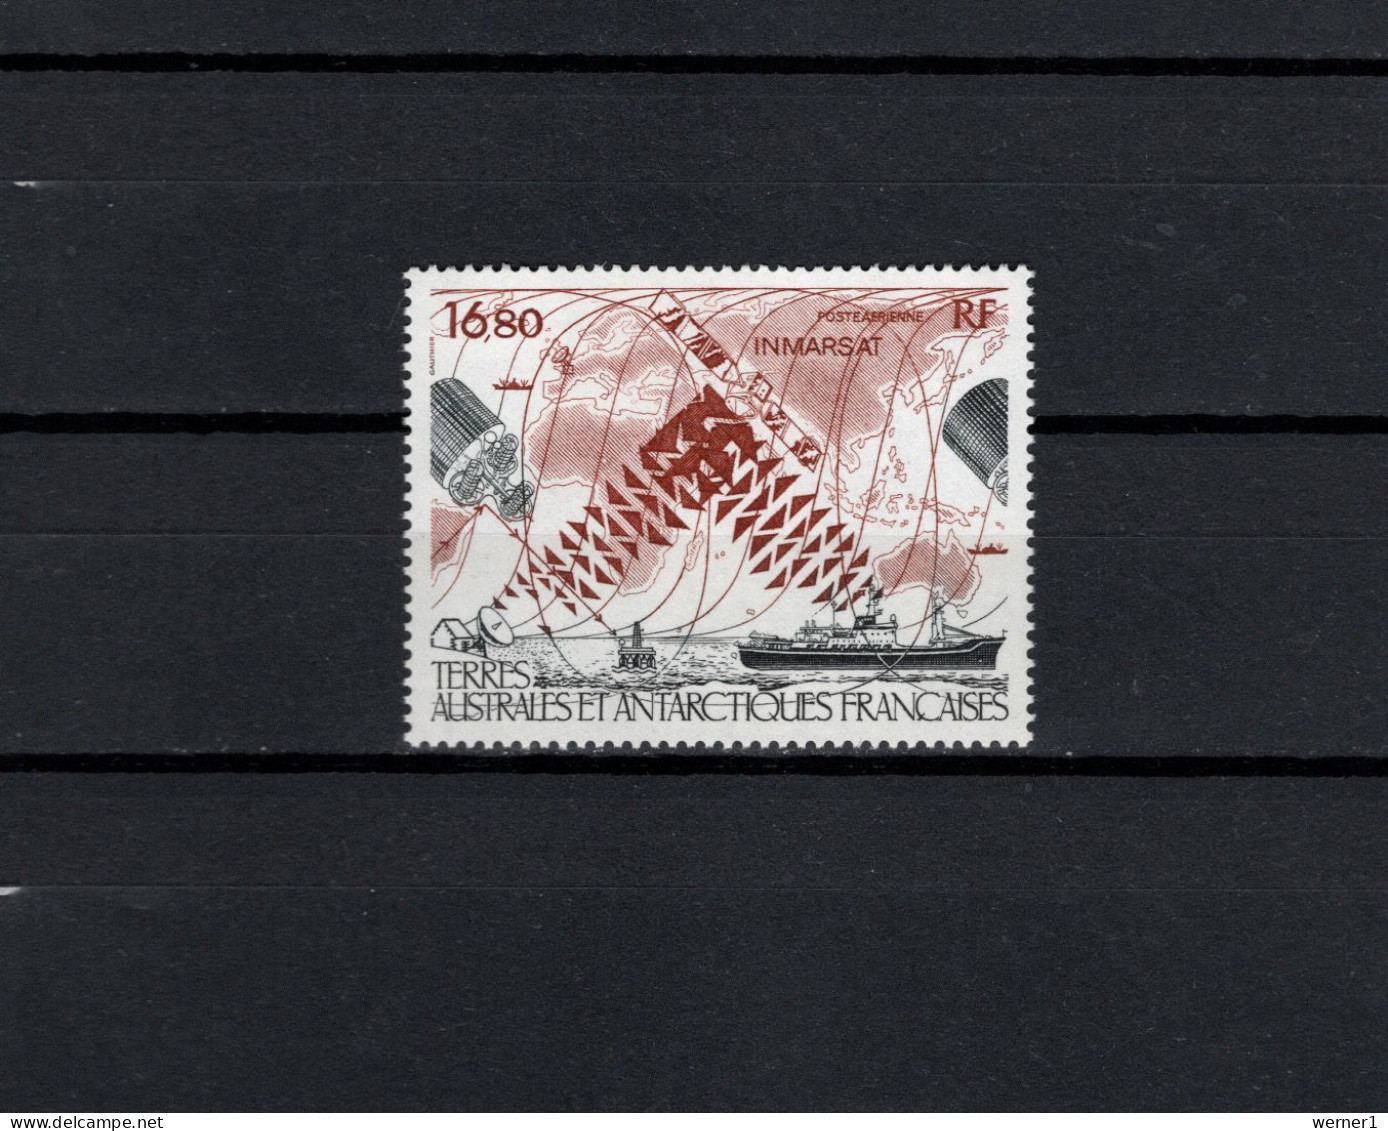 FSAT French Antarctic Territory 1987 Space, INMARSAT Stamp MNH - Oceanía